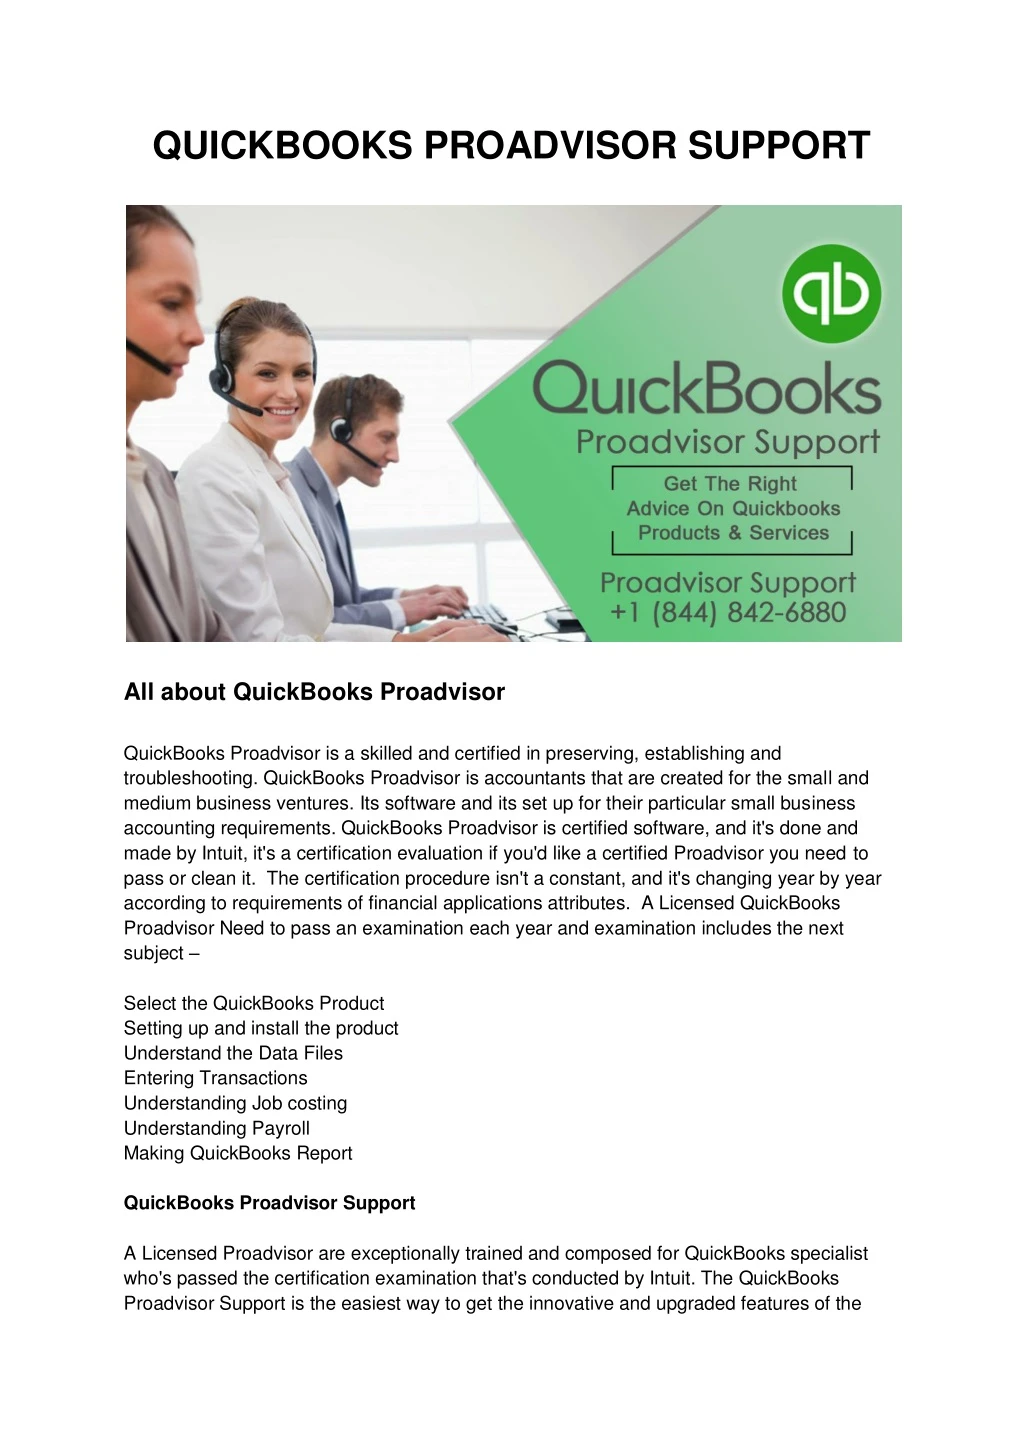 quickbooks proadvisor support